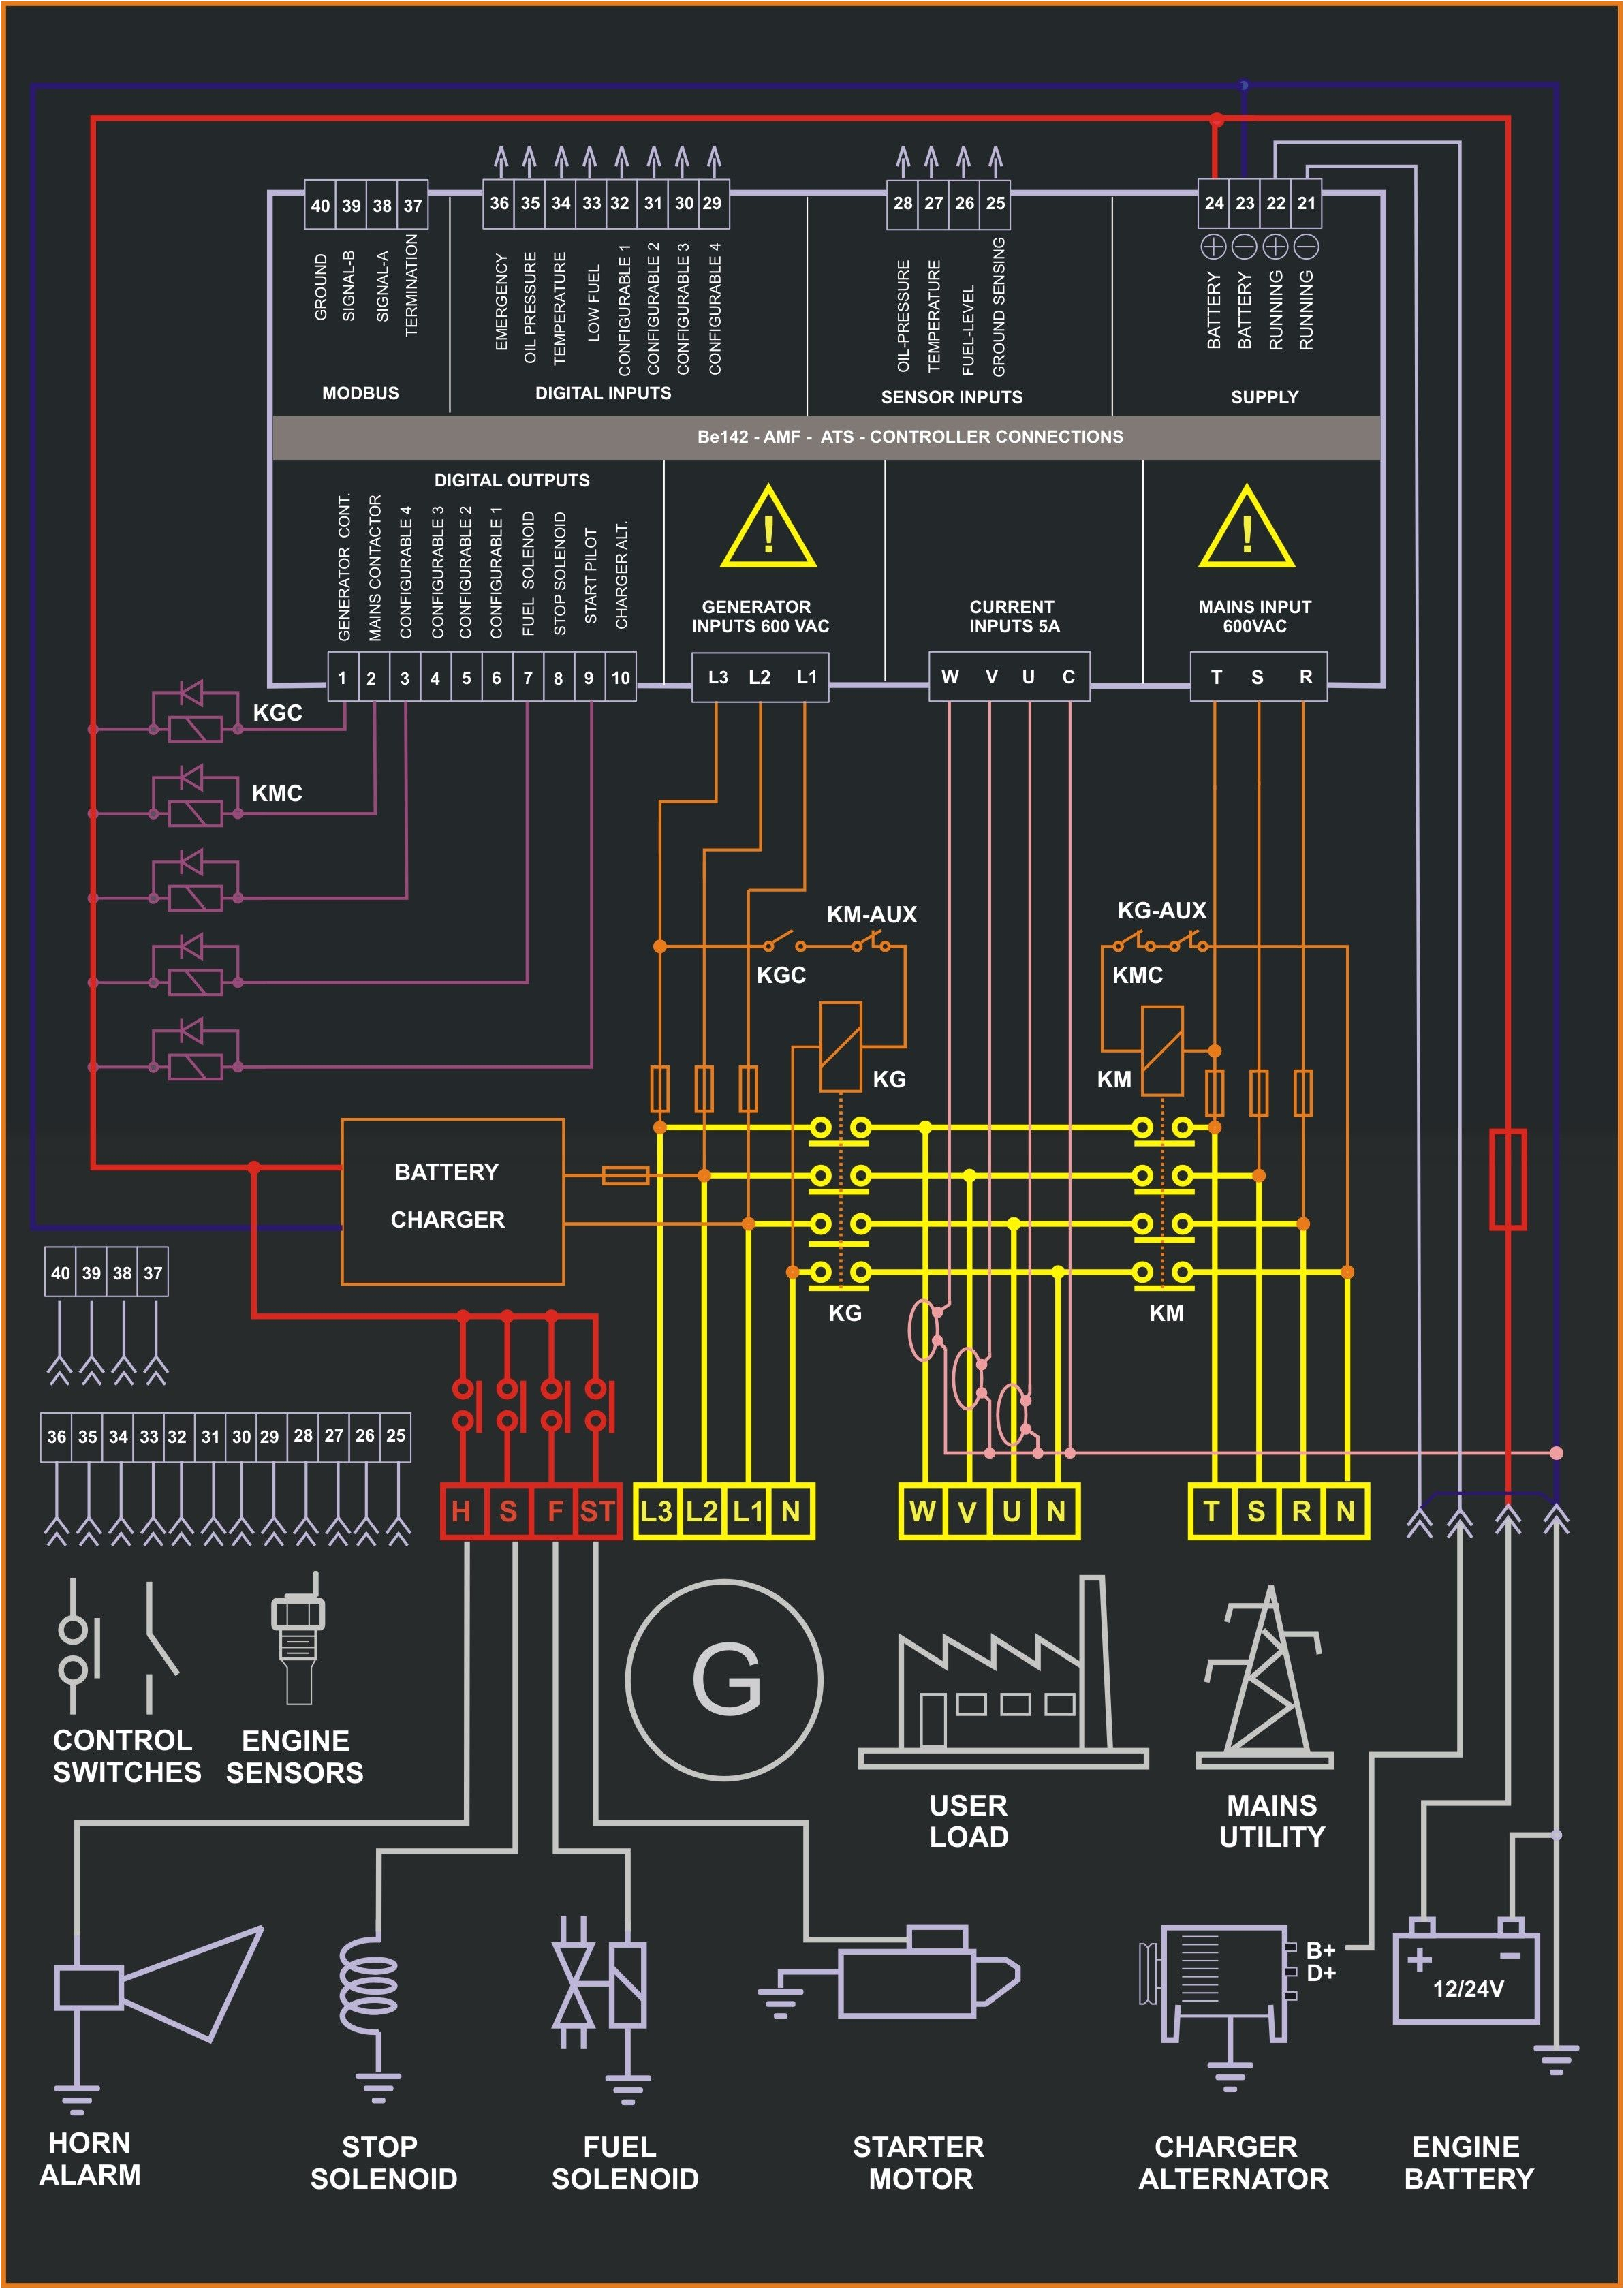 electrical panel board wiring diagram pdf fresh 41 awesome circuit plc control panel wiring diagram pdf